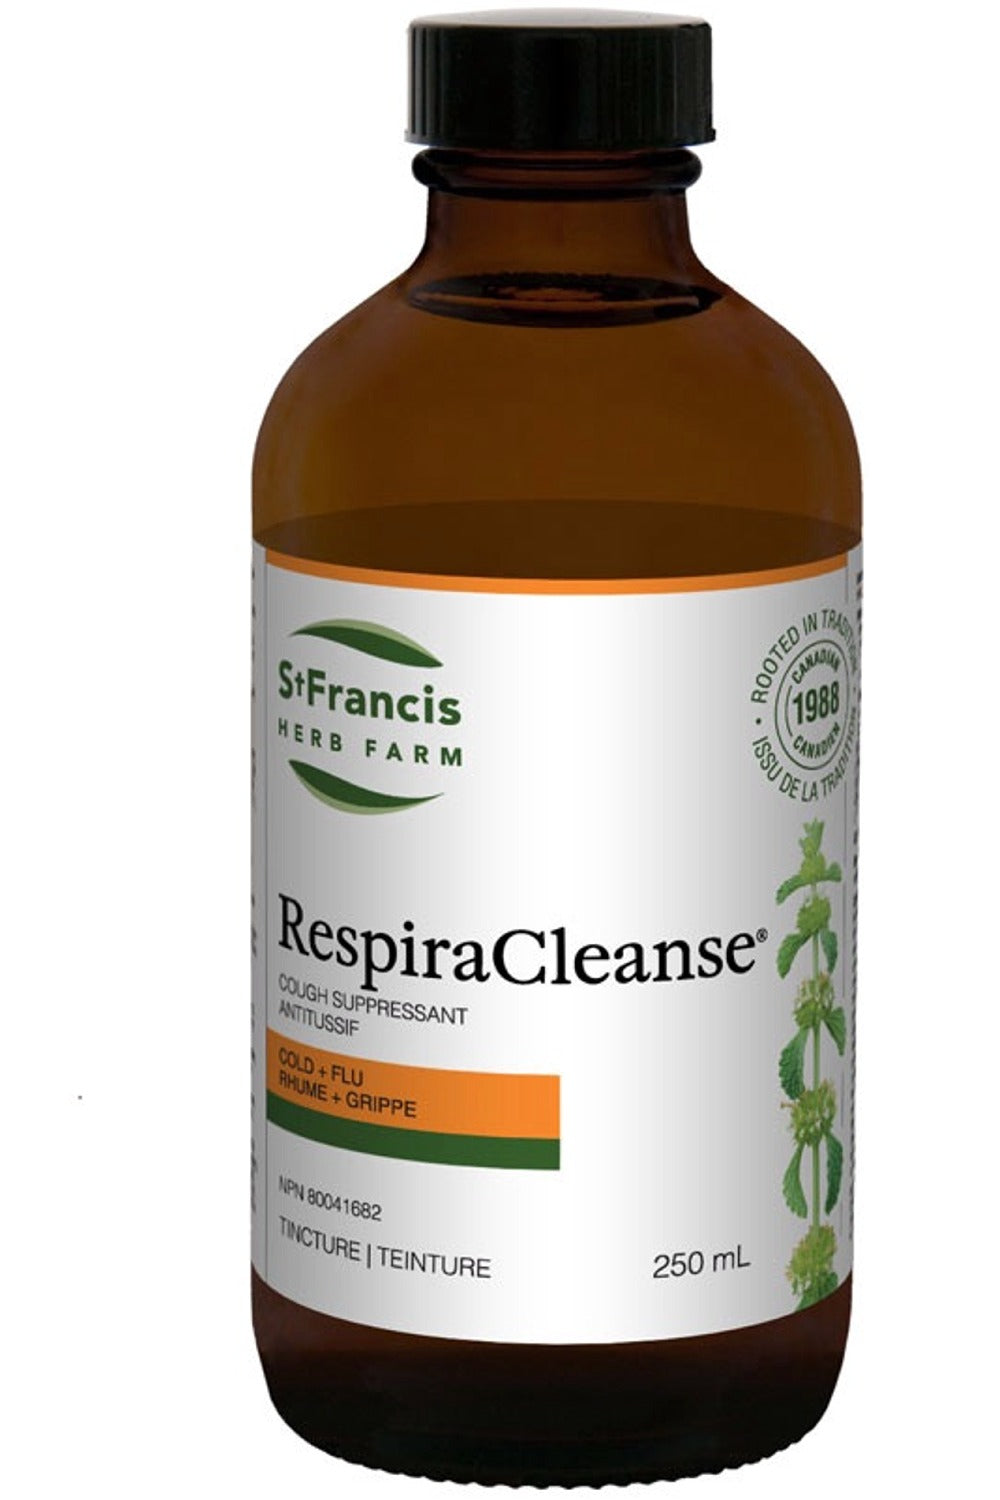 ST FRANCIS HERB FARM RespiraCleanse (250 ml)